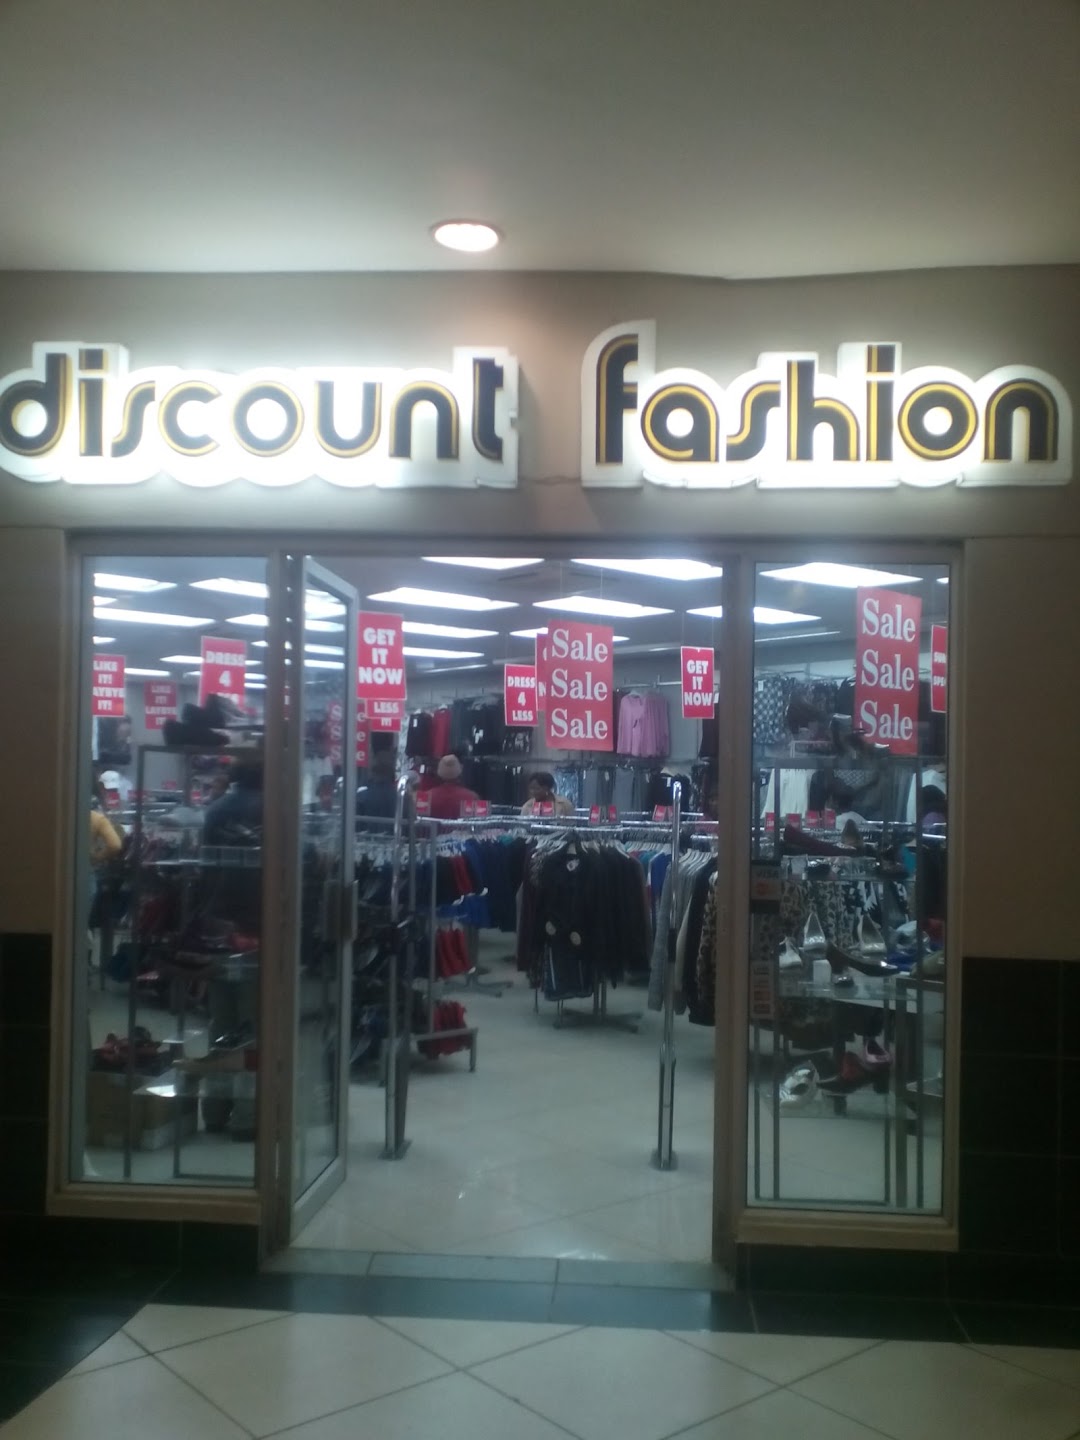 Discount Fashion